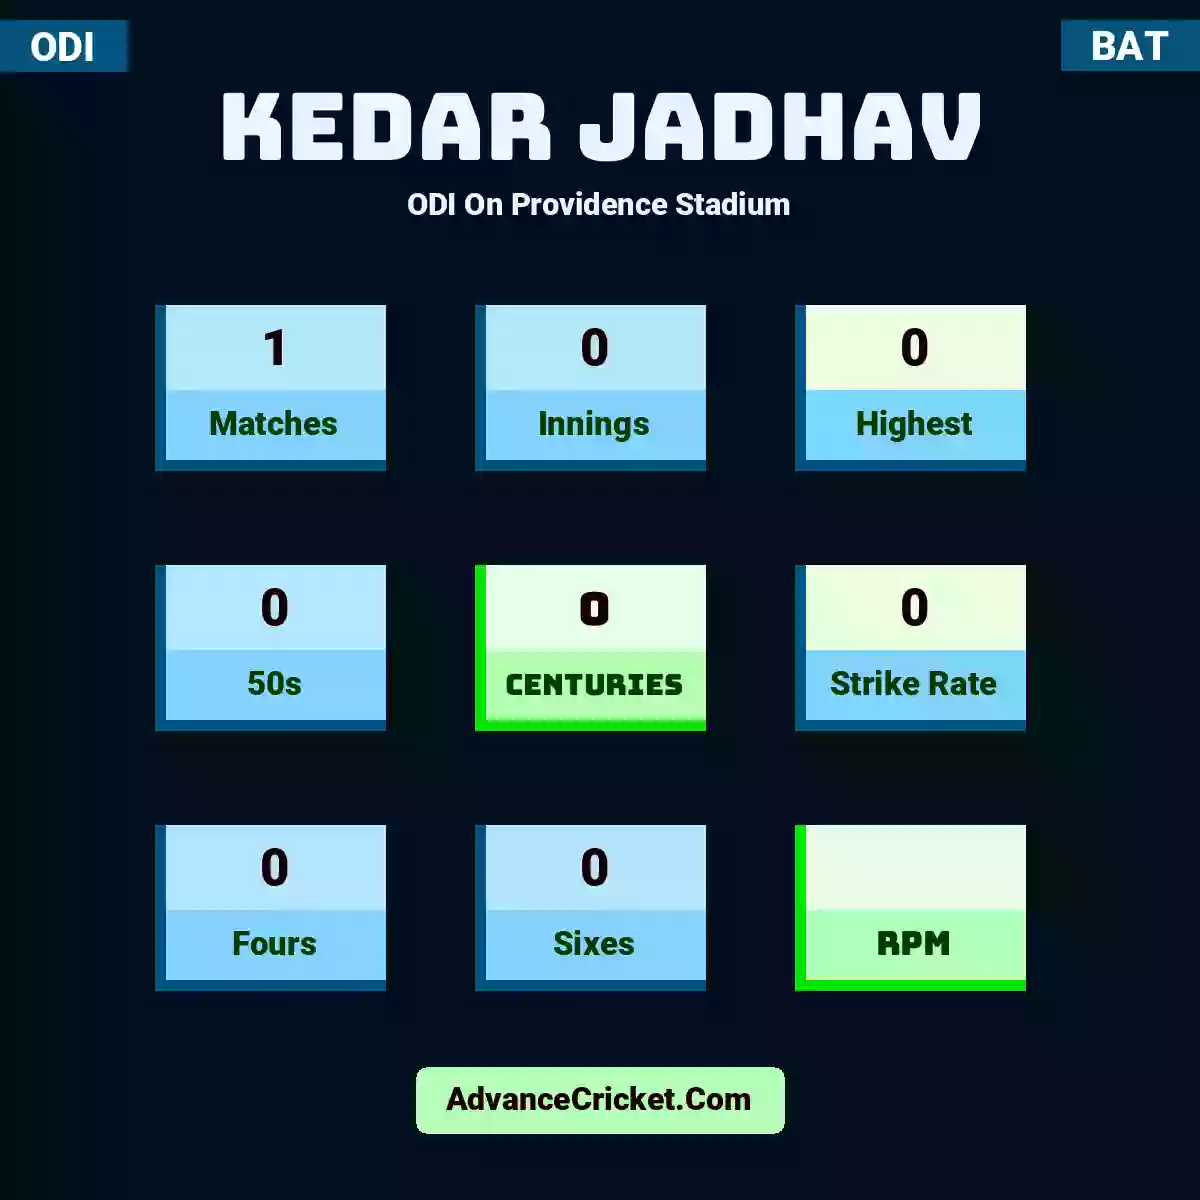 Kedar Jadhav ODI  On Providence Stadium, Kedar Jadhav played 1 matches, scored 0 runs as highest, 0 half-centuries, and 0 centuries, with a strike rate of 0. K.Jadhav hit 0 fours and 0 sixes.